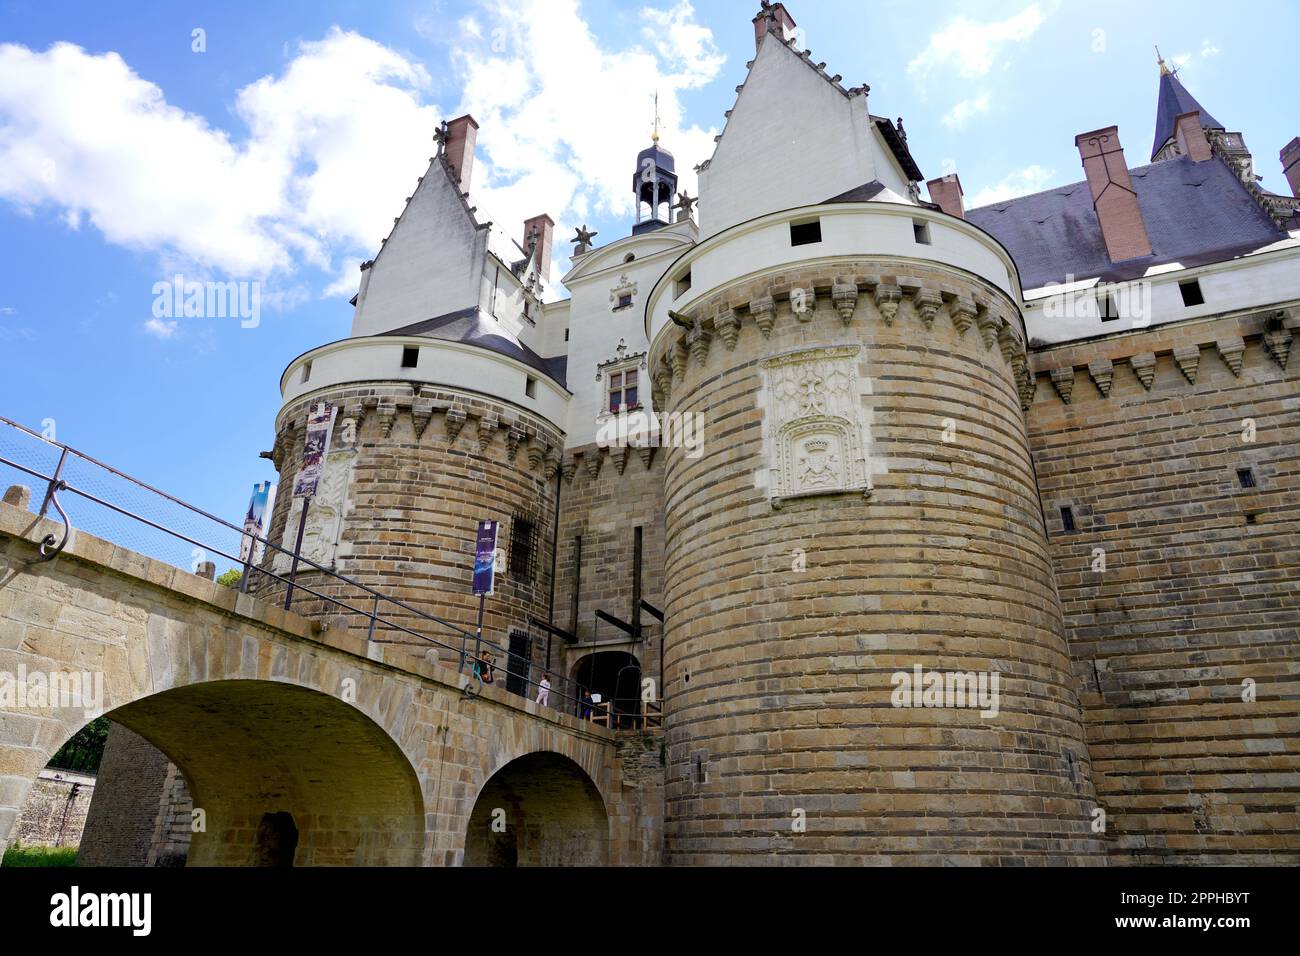 NANTES, FRANKREICH - 5. JUNI 2022: Das Chateau des ducs de Bretagne ist ein Schloss in Nantes, Frankreich Stockfoto